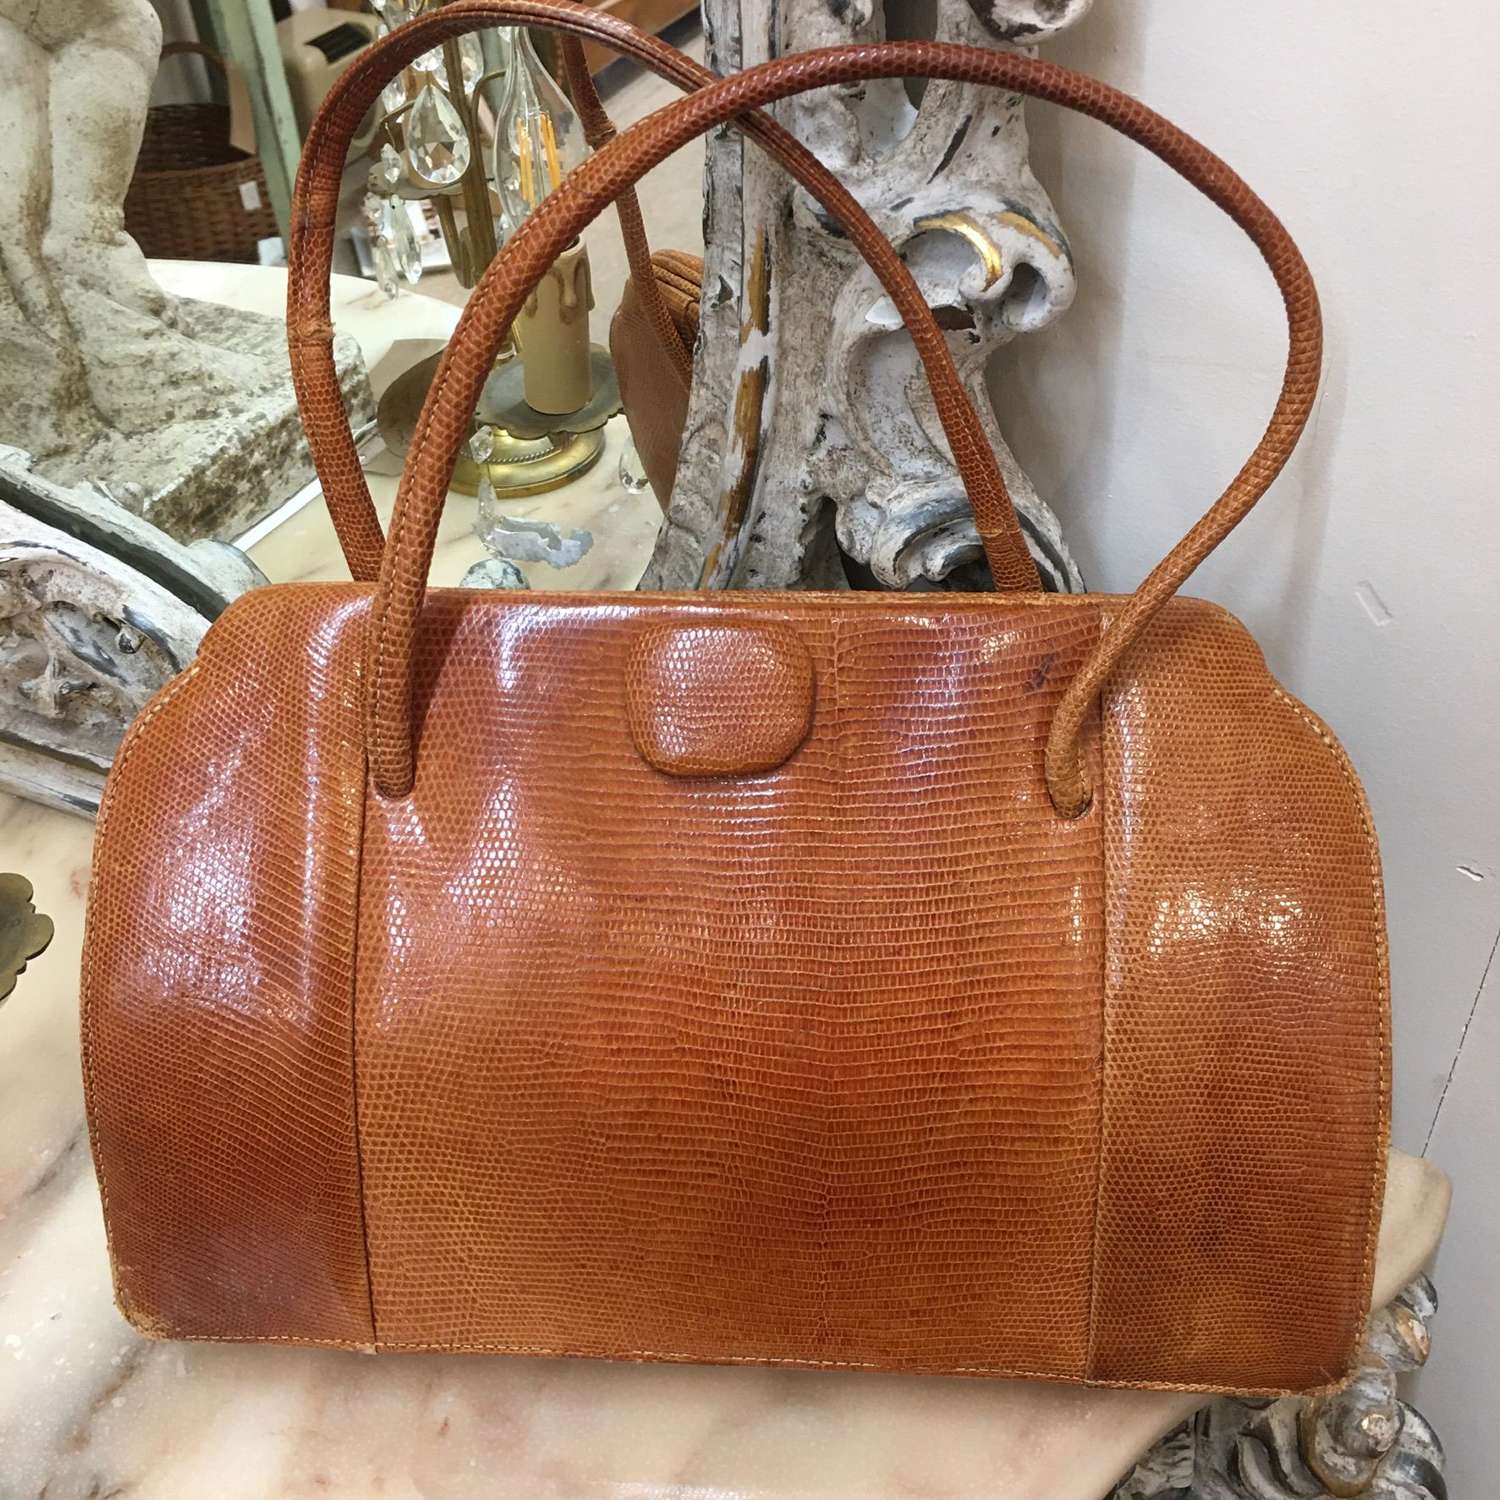 Vintage tan snakeskin handbag